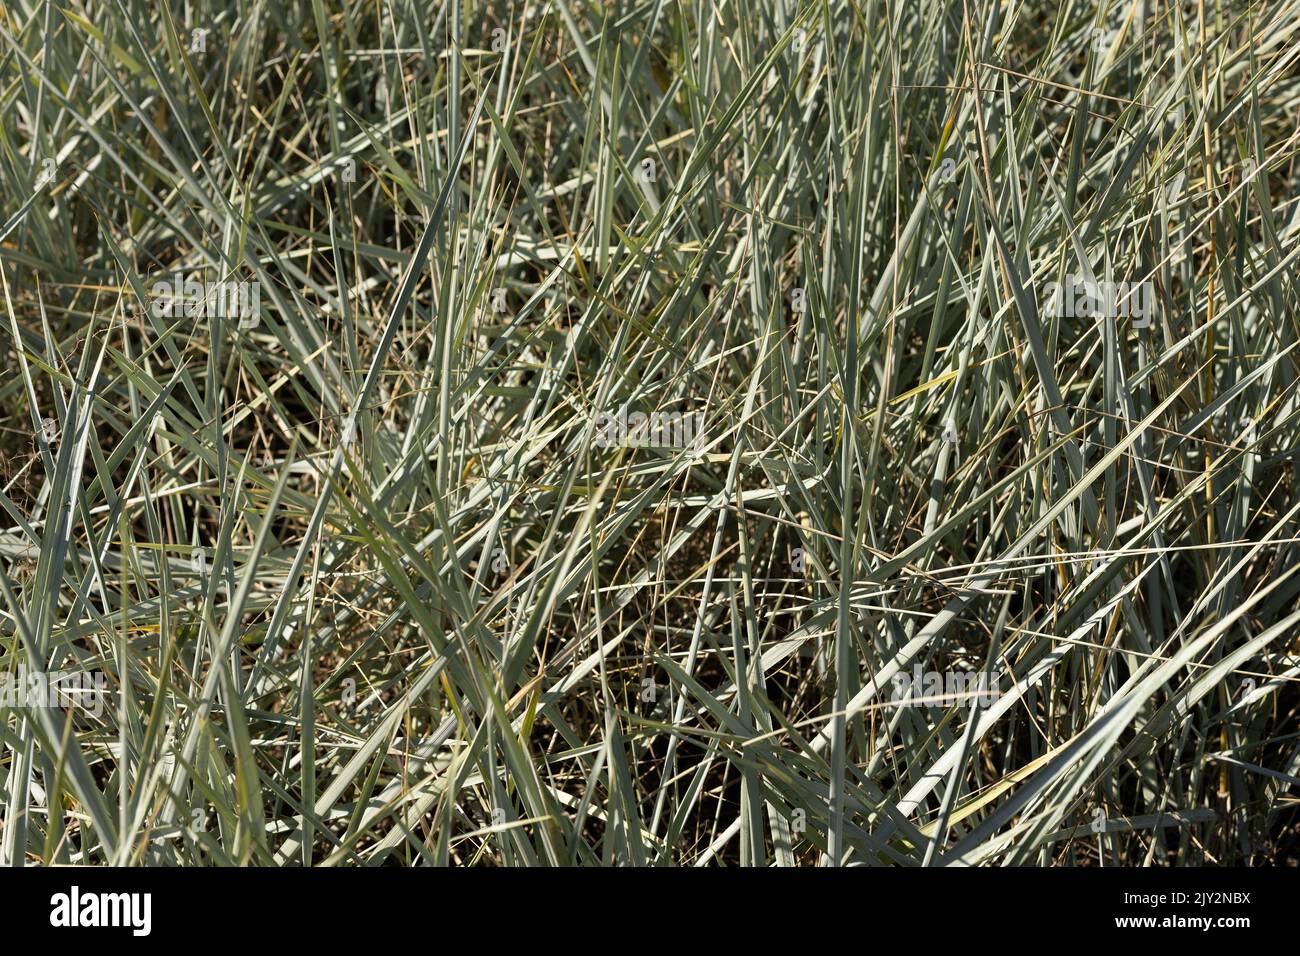 Leymus arenarius 'Blue Dune' grass. Stock Photo